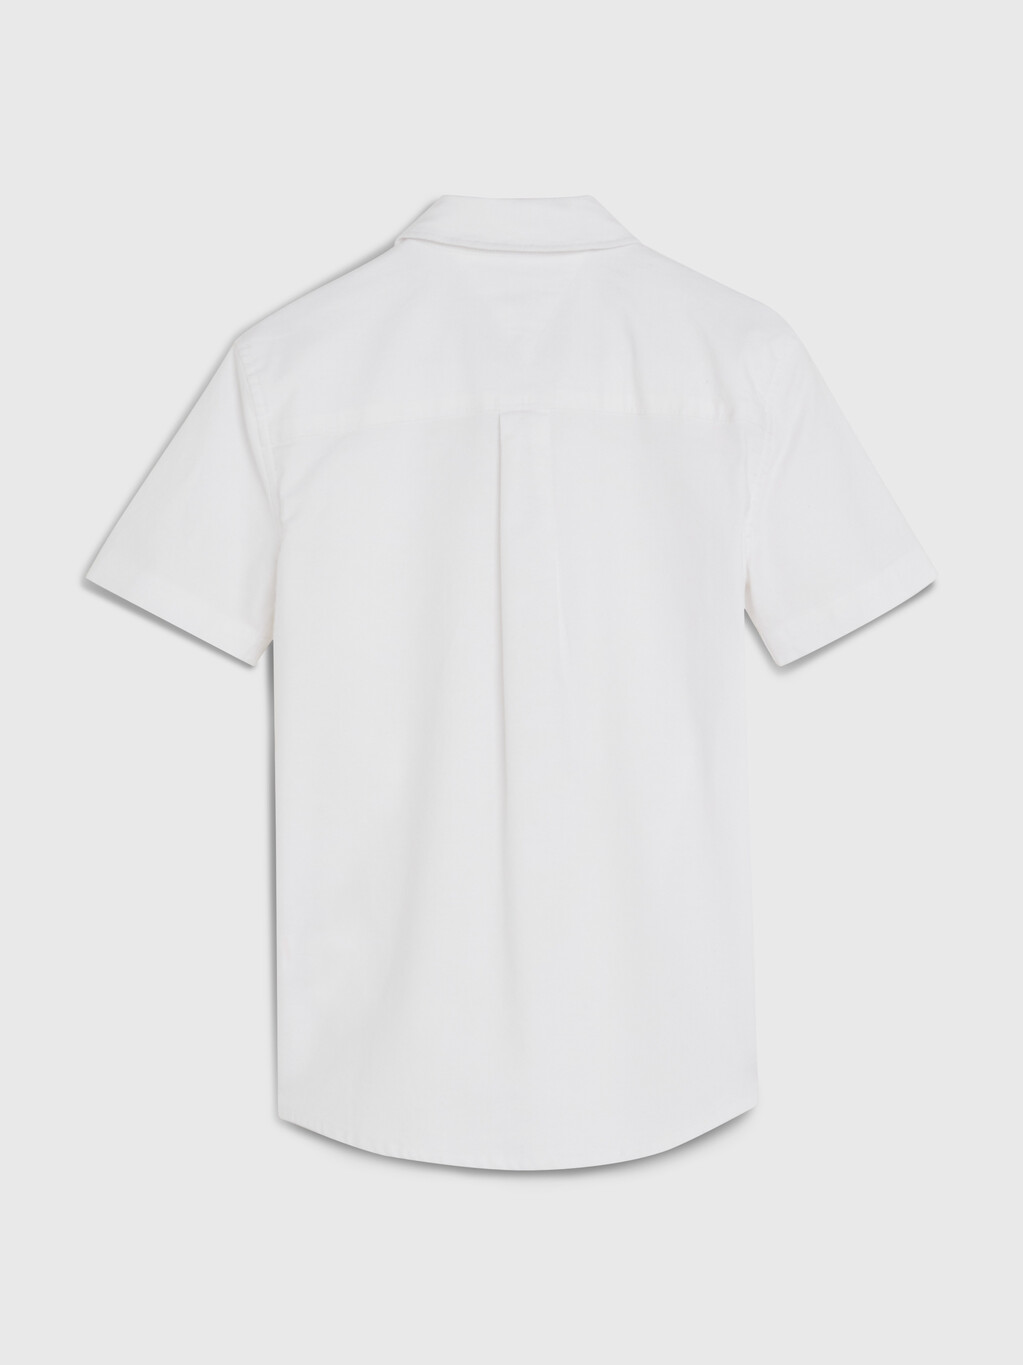 Short Sleeve Oxford Shirt, White, hi-res